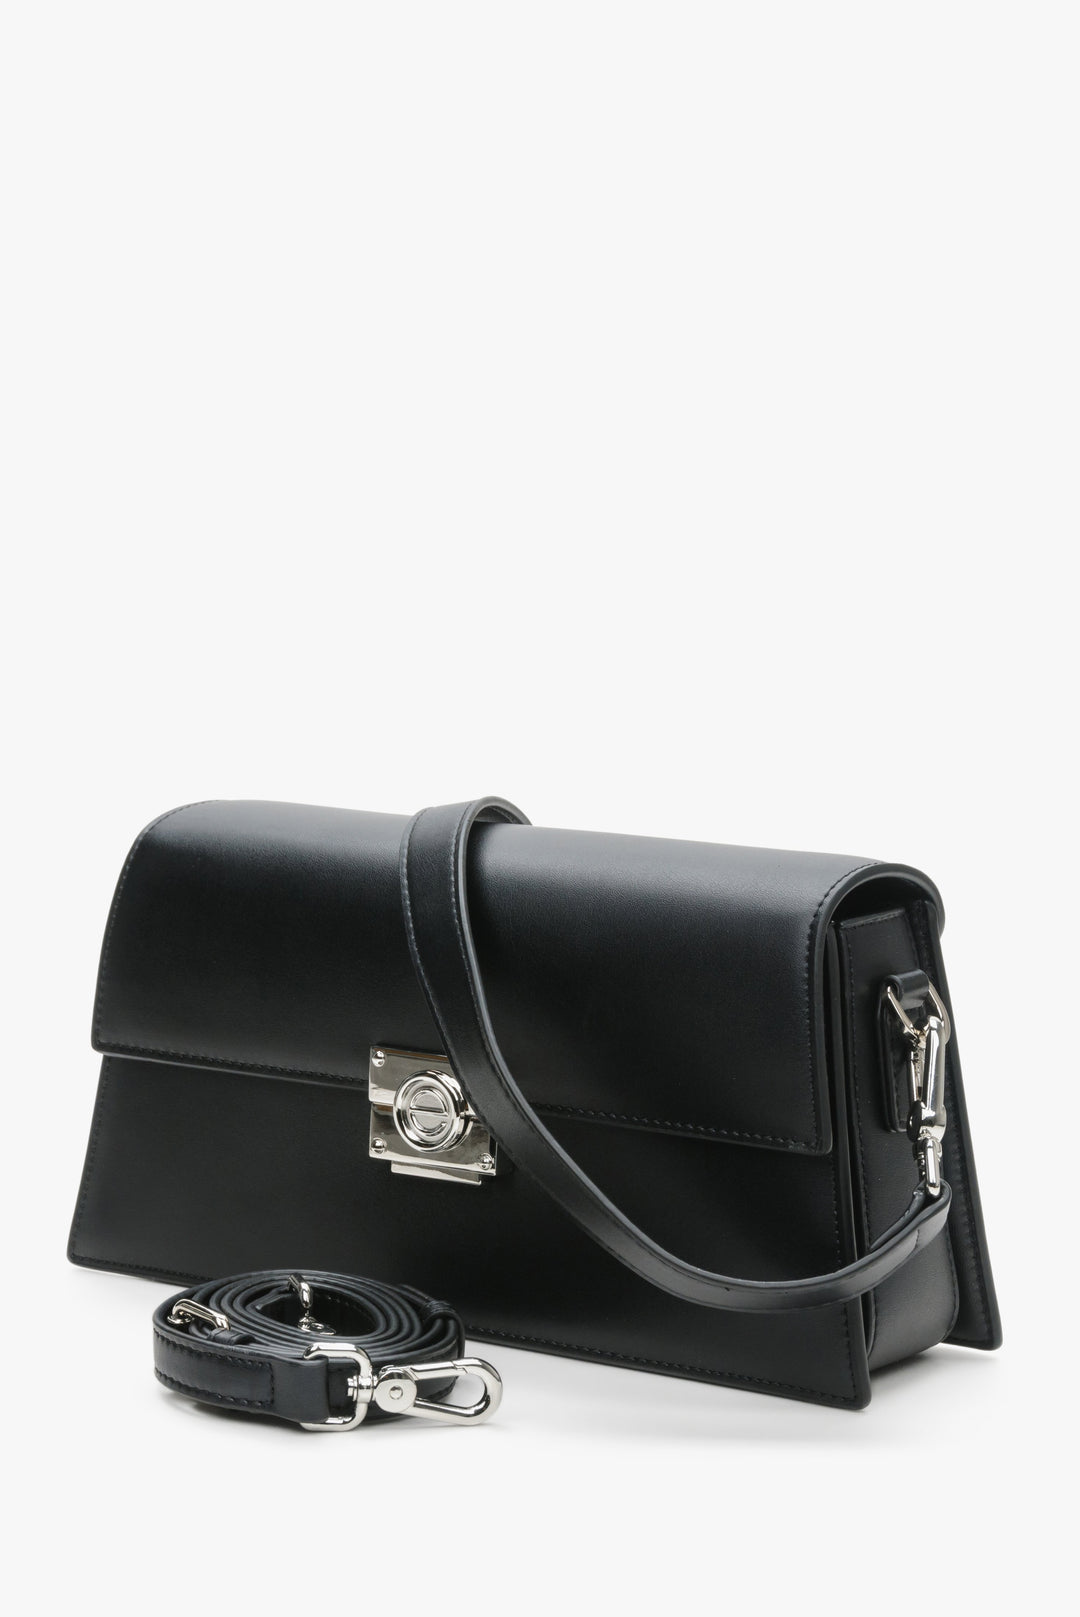 Women's black chain handbag made of genuine leather by Estro.